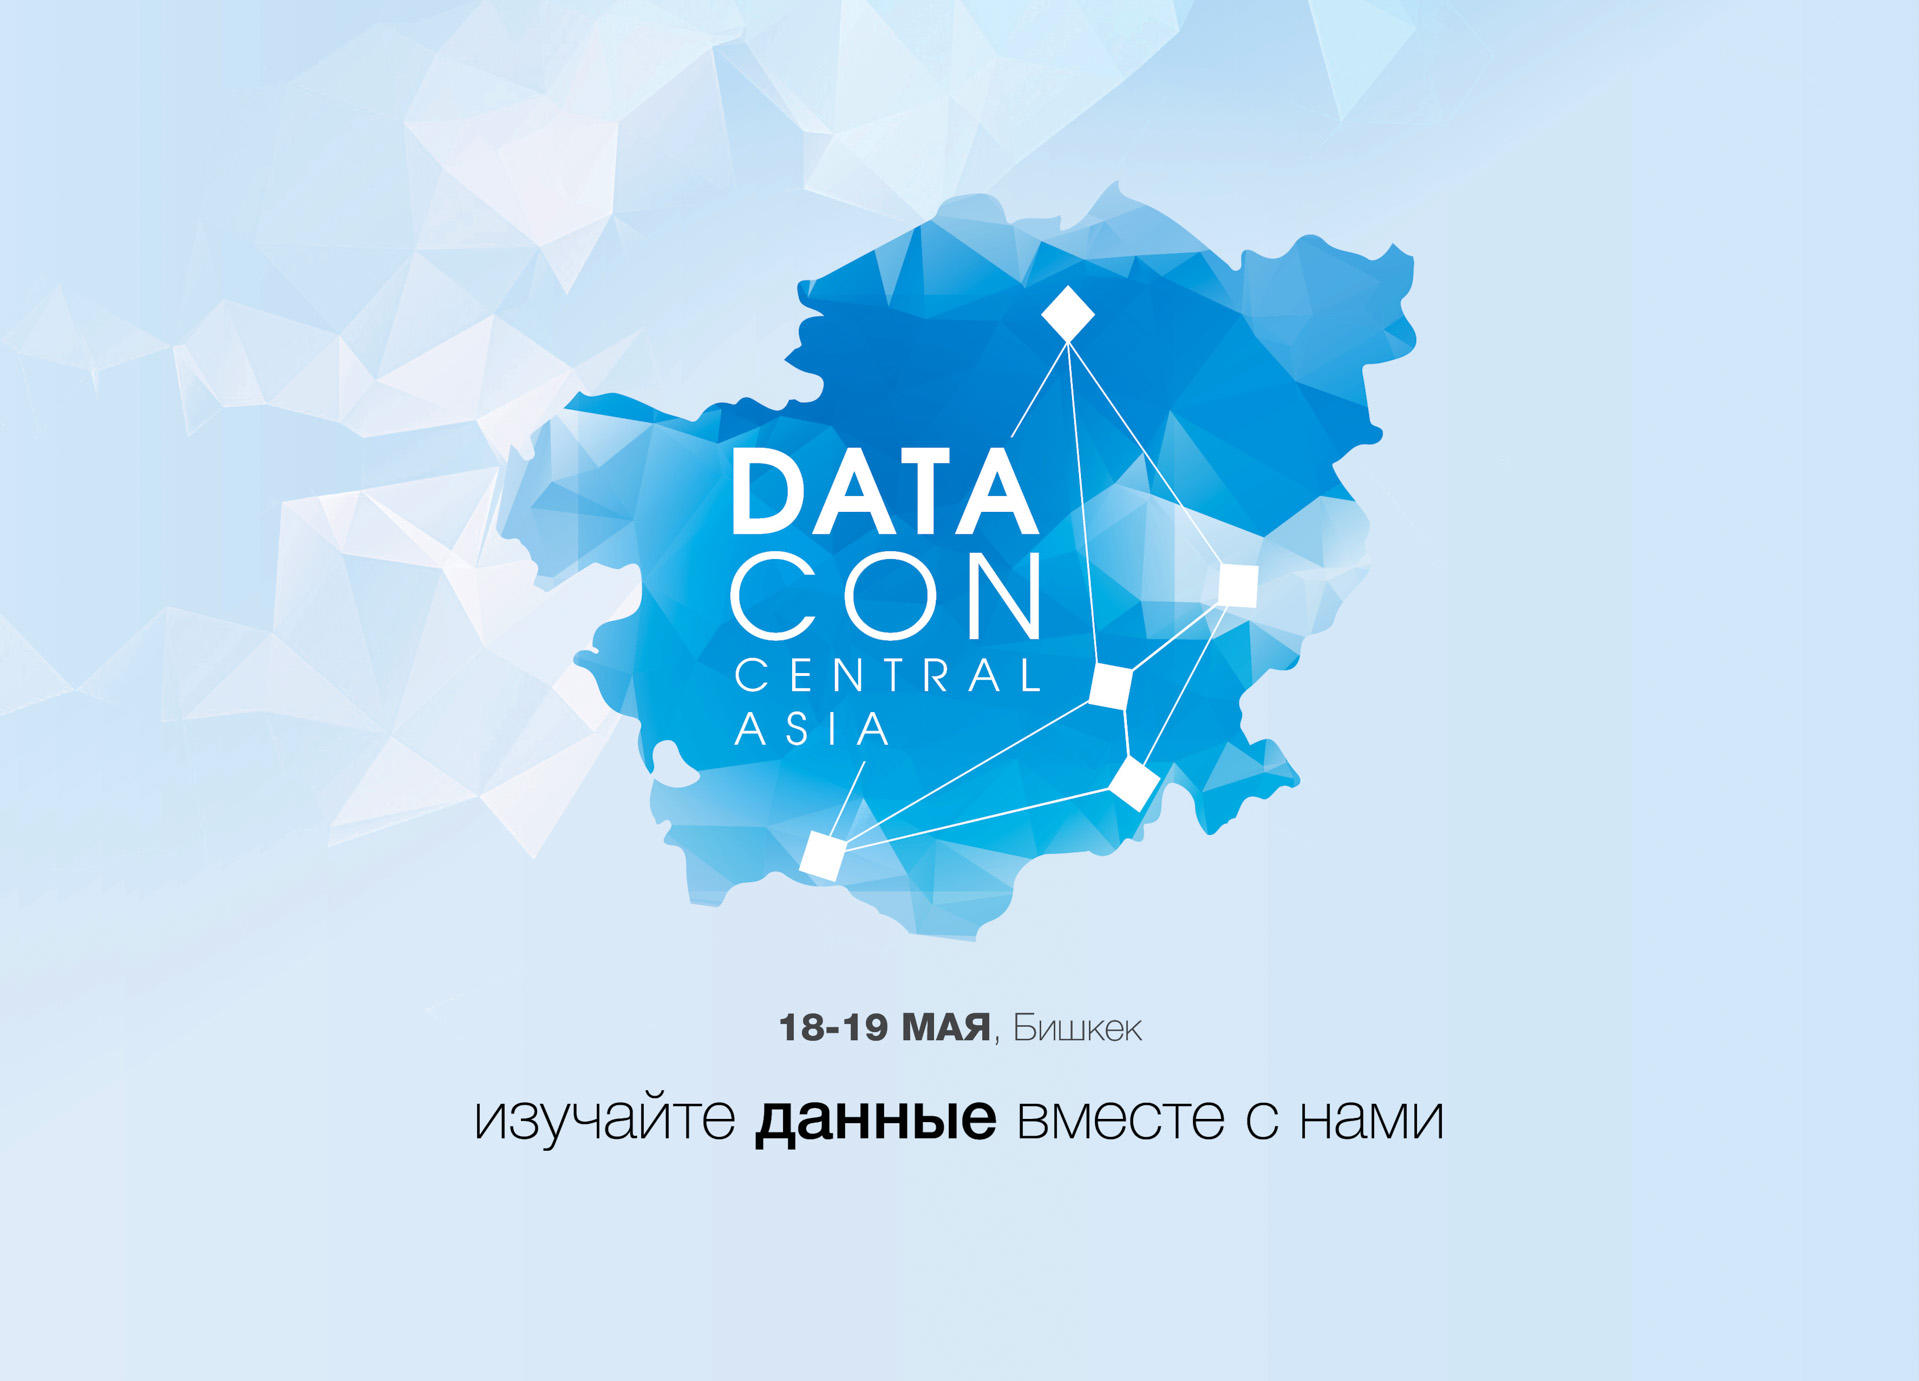 DataCon Central Asia